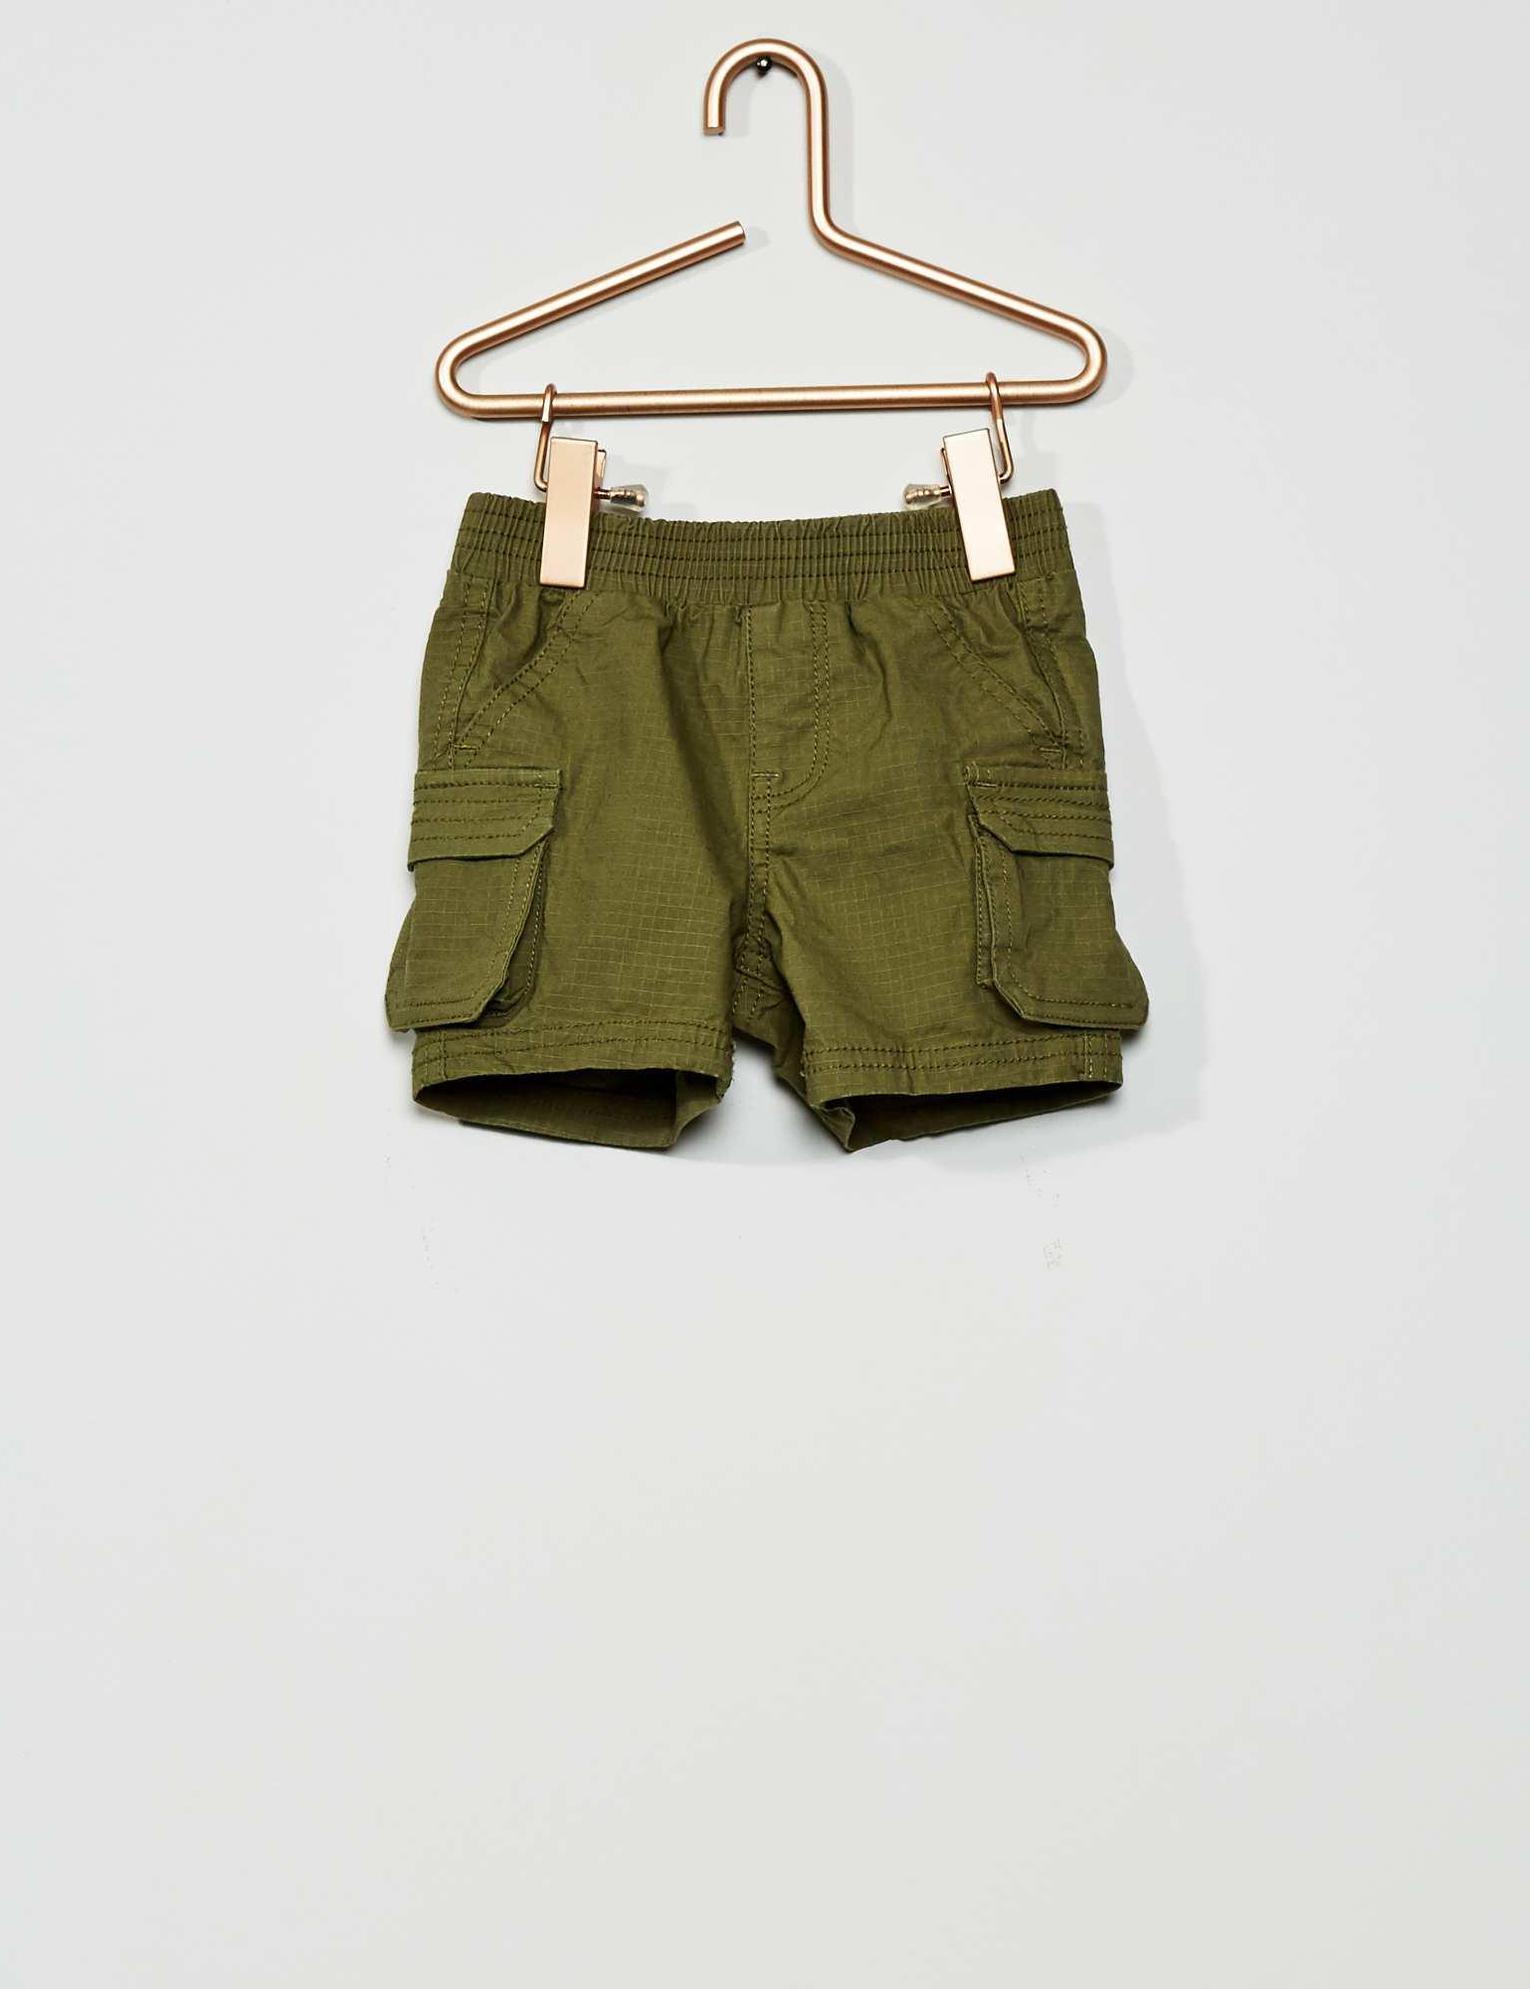 Buy Combat-style shorts Online in Dubai 